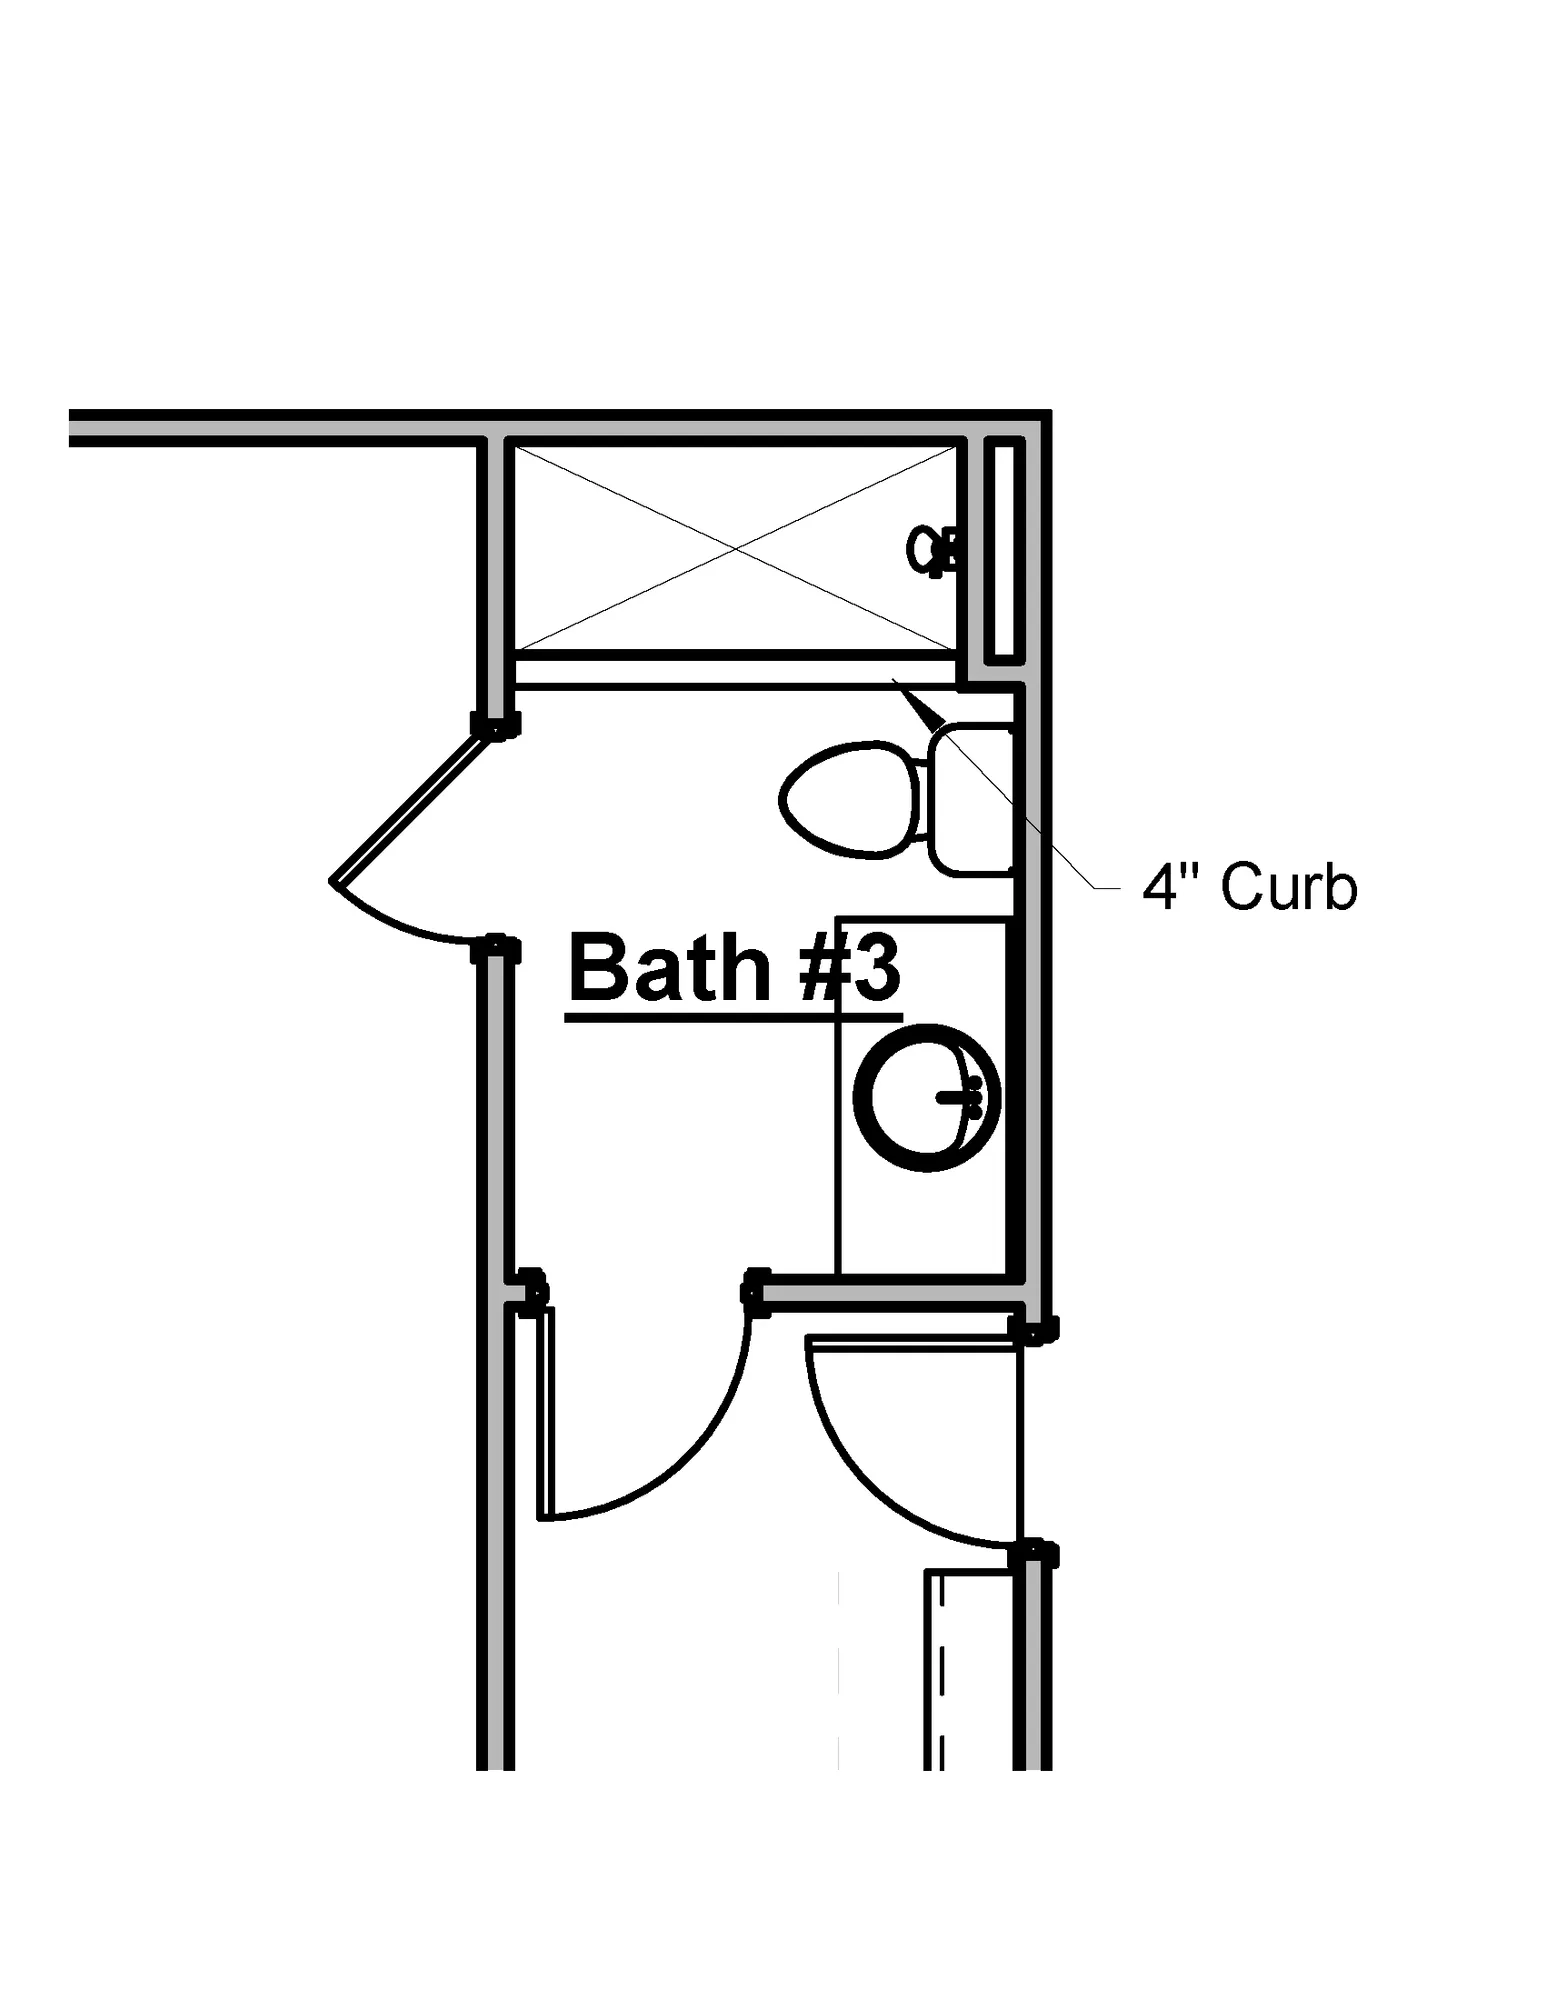 Bath 3 with Tile Shower option - undefined